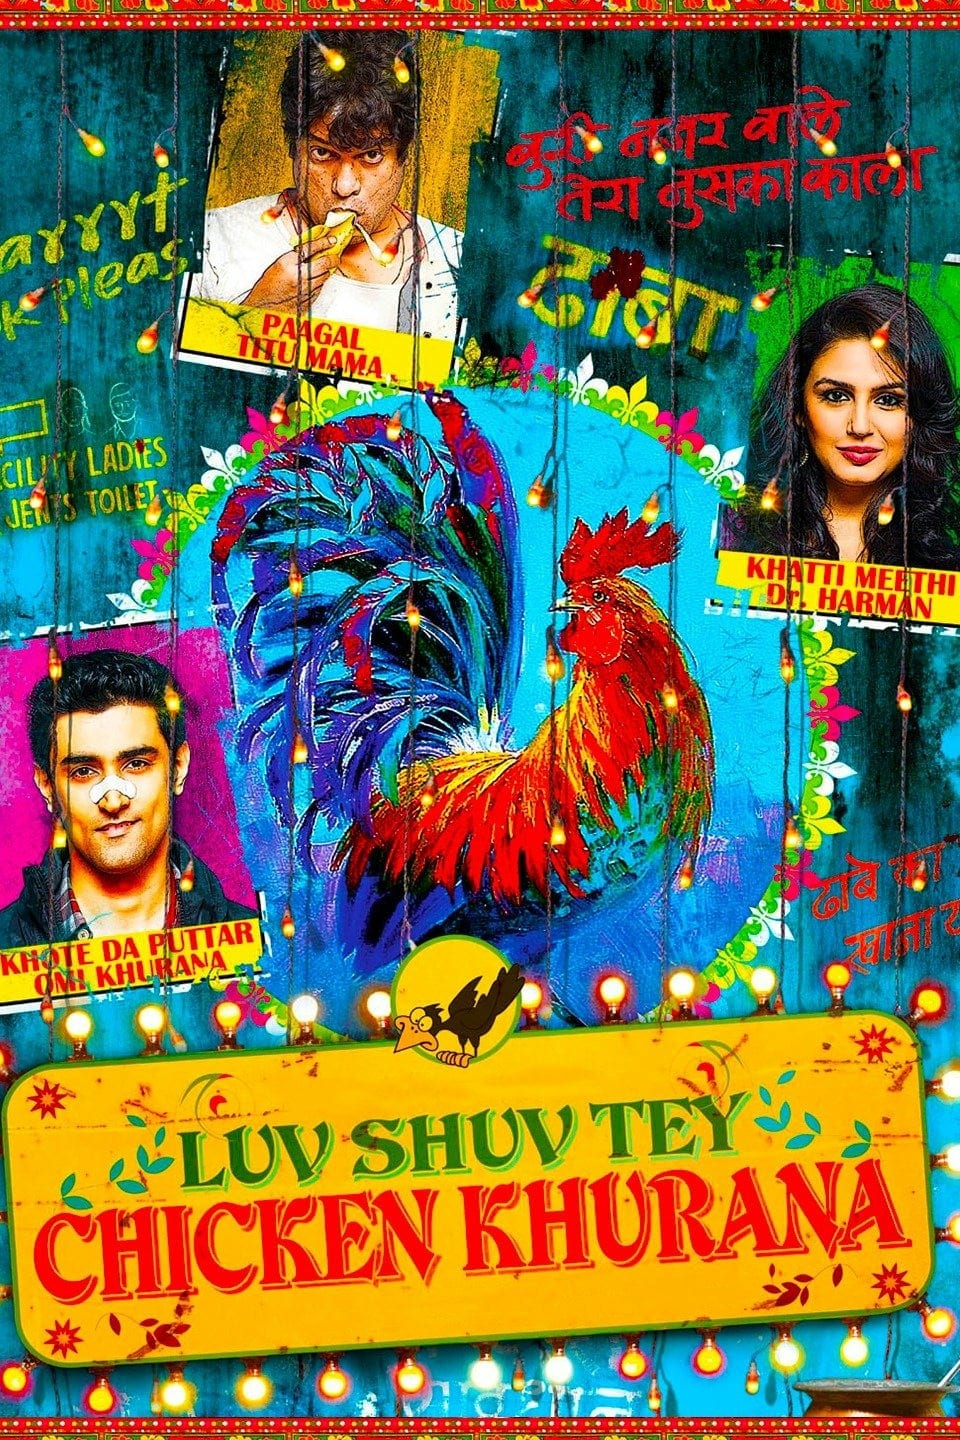 Poster for the movie "Luv Shuv Tey Chicken Khurana"